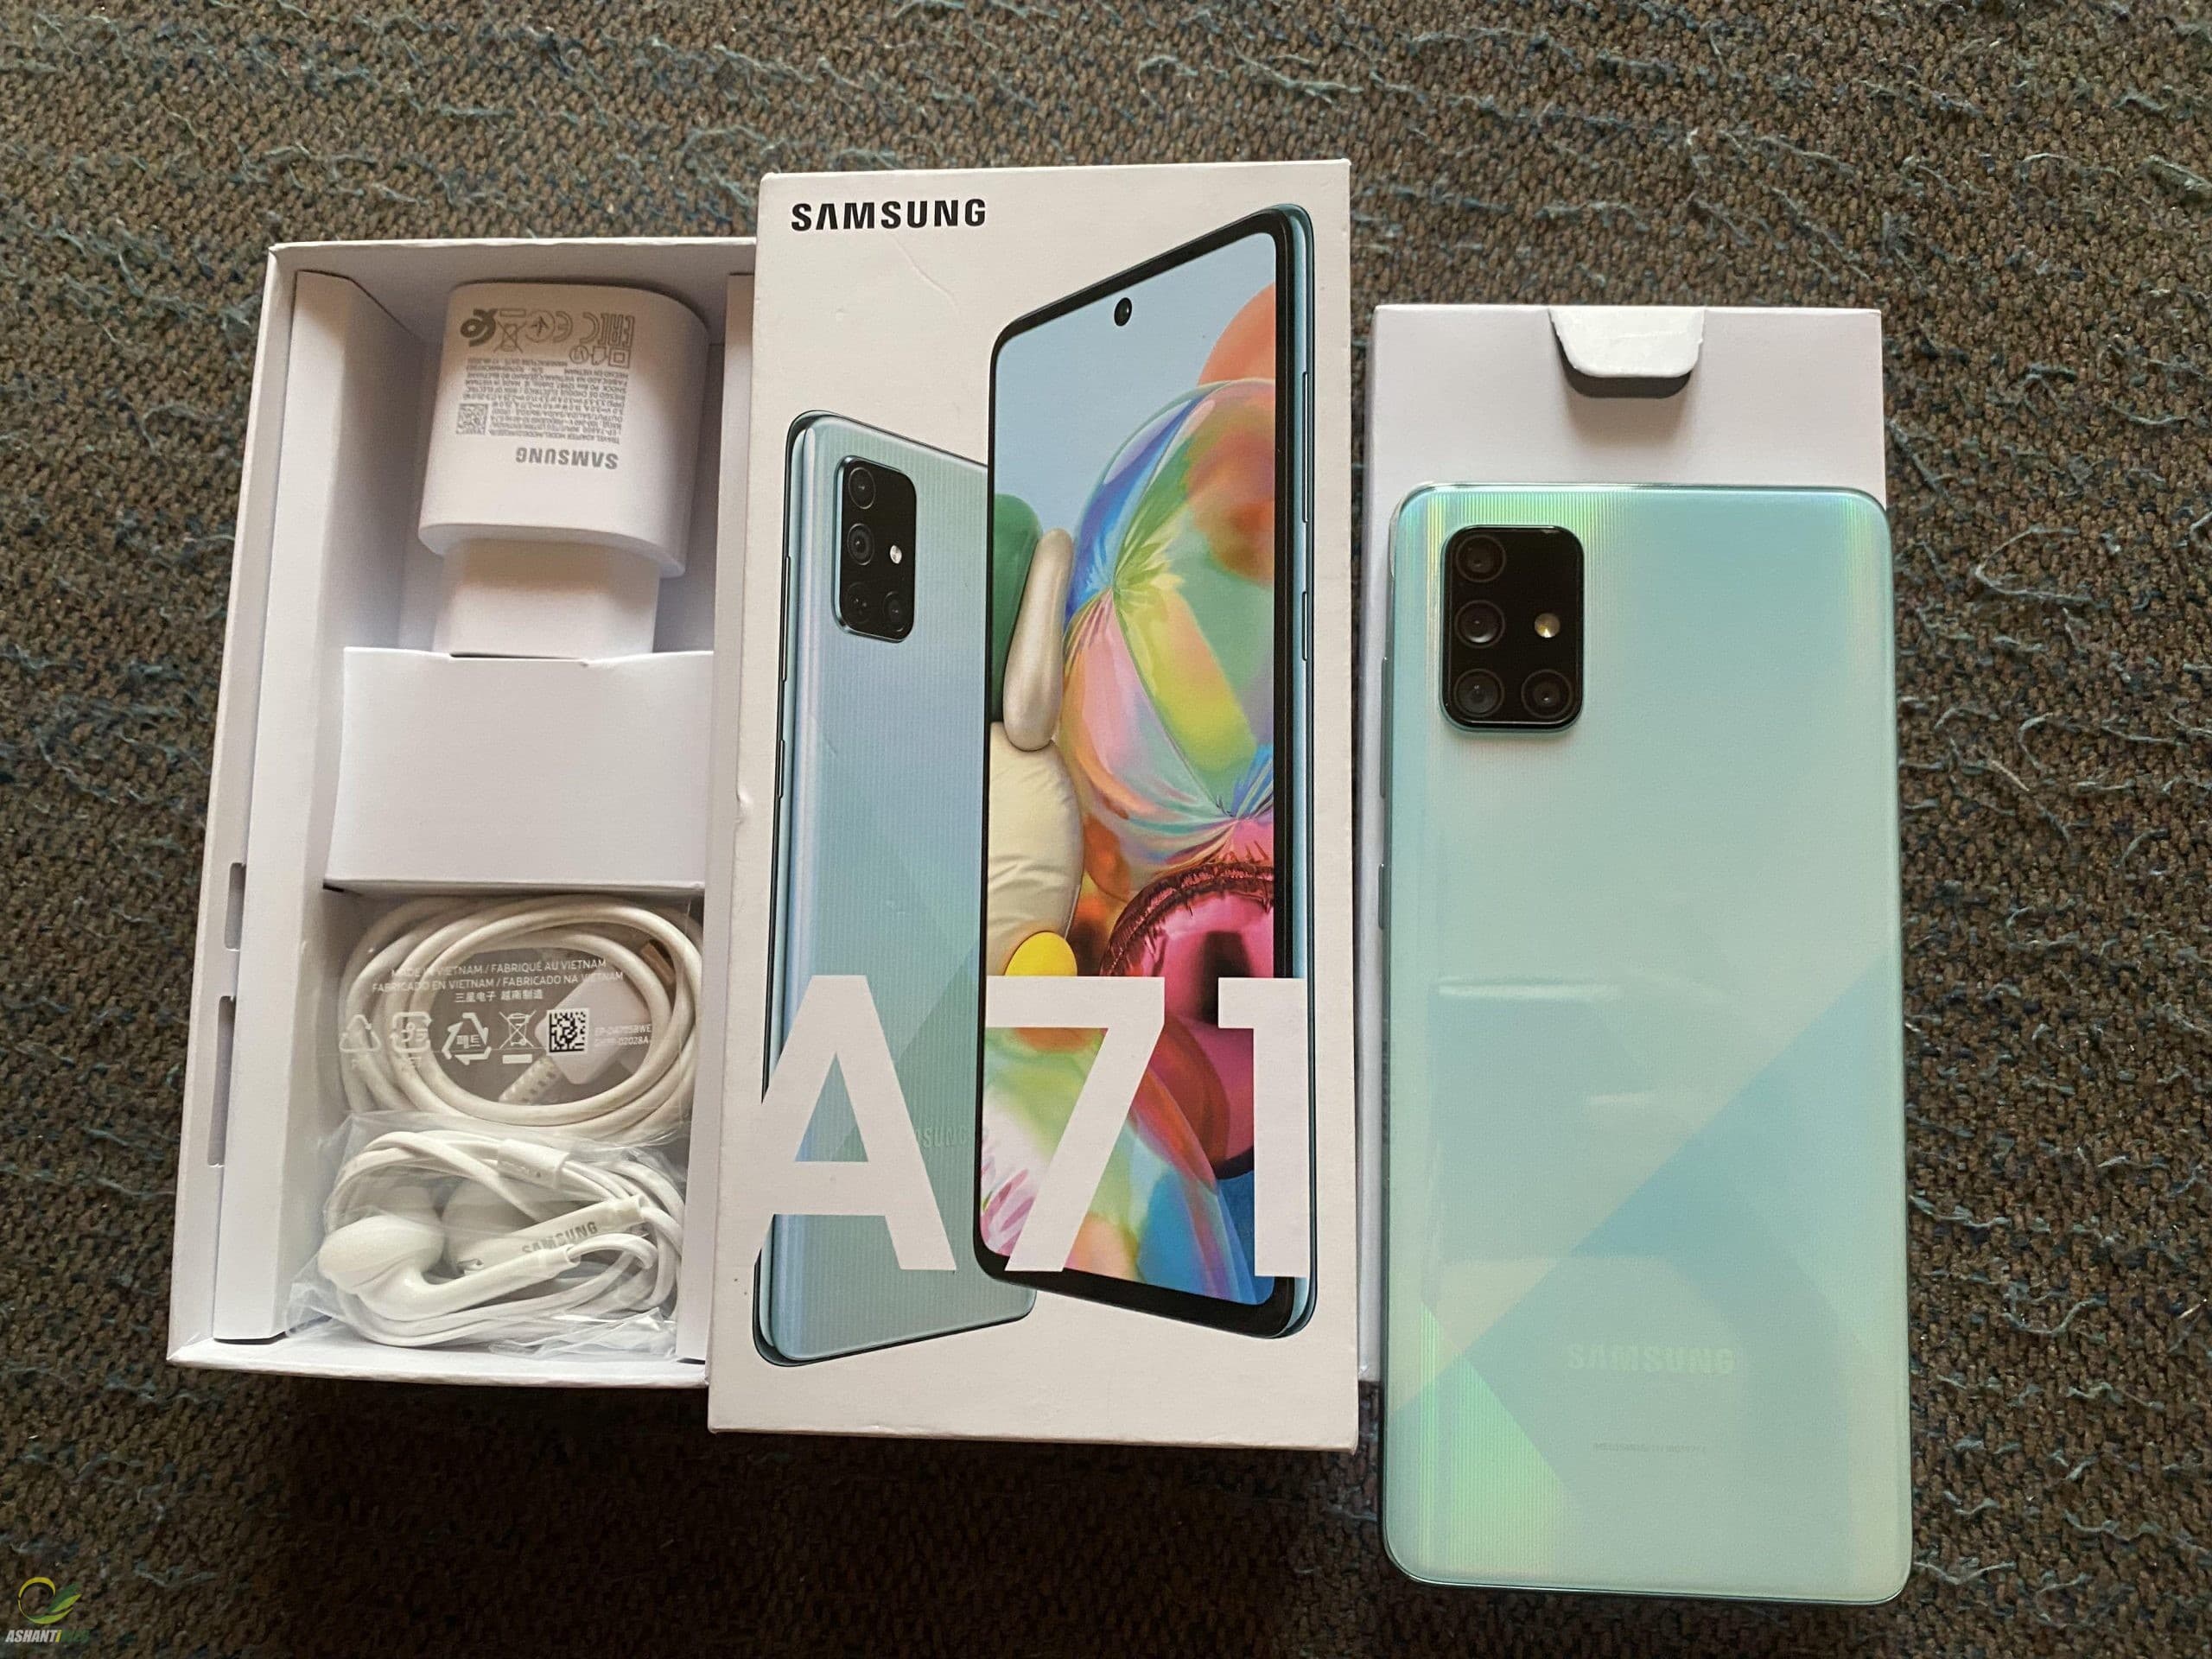 Samsung A71 5G (in box)